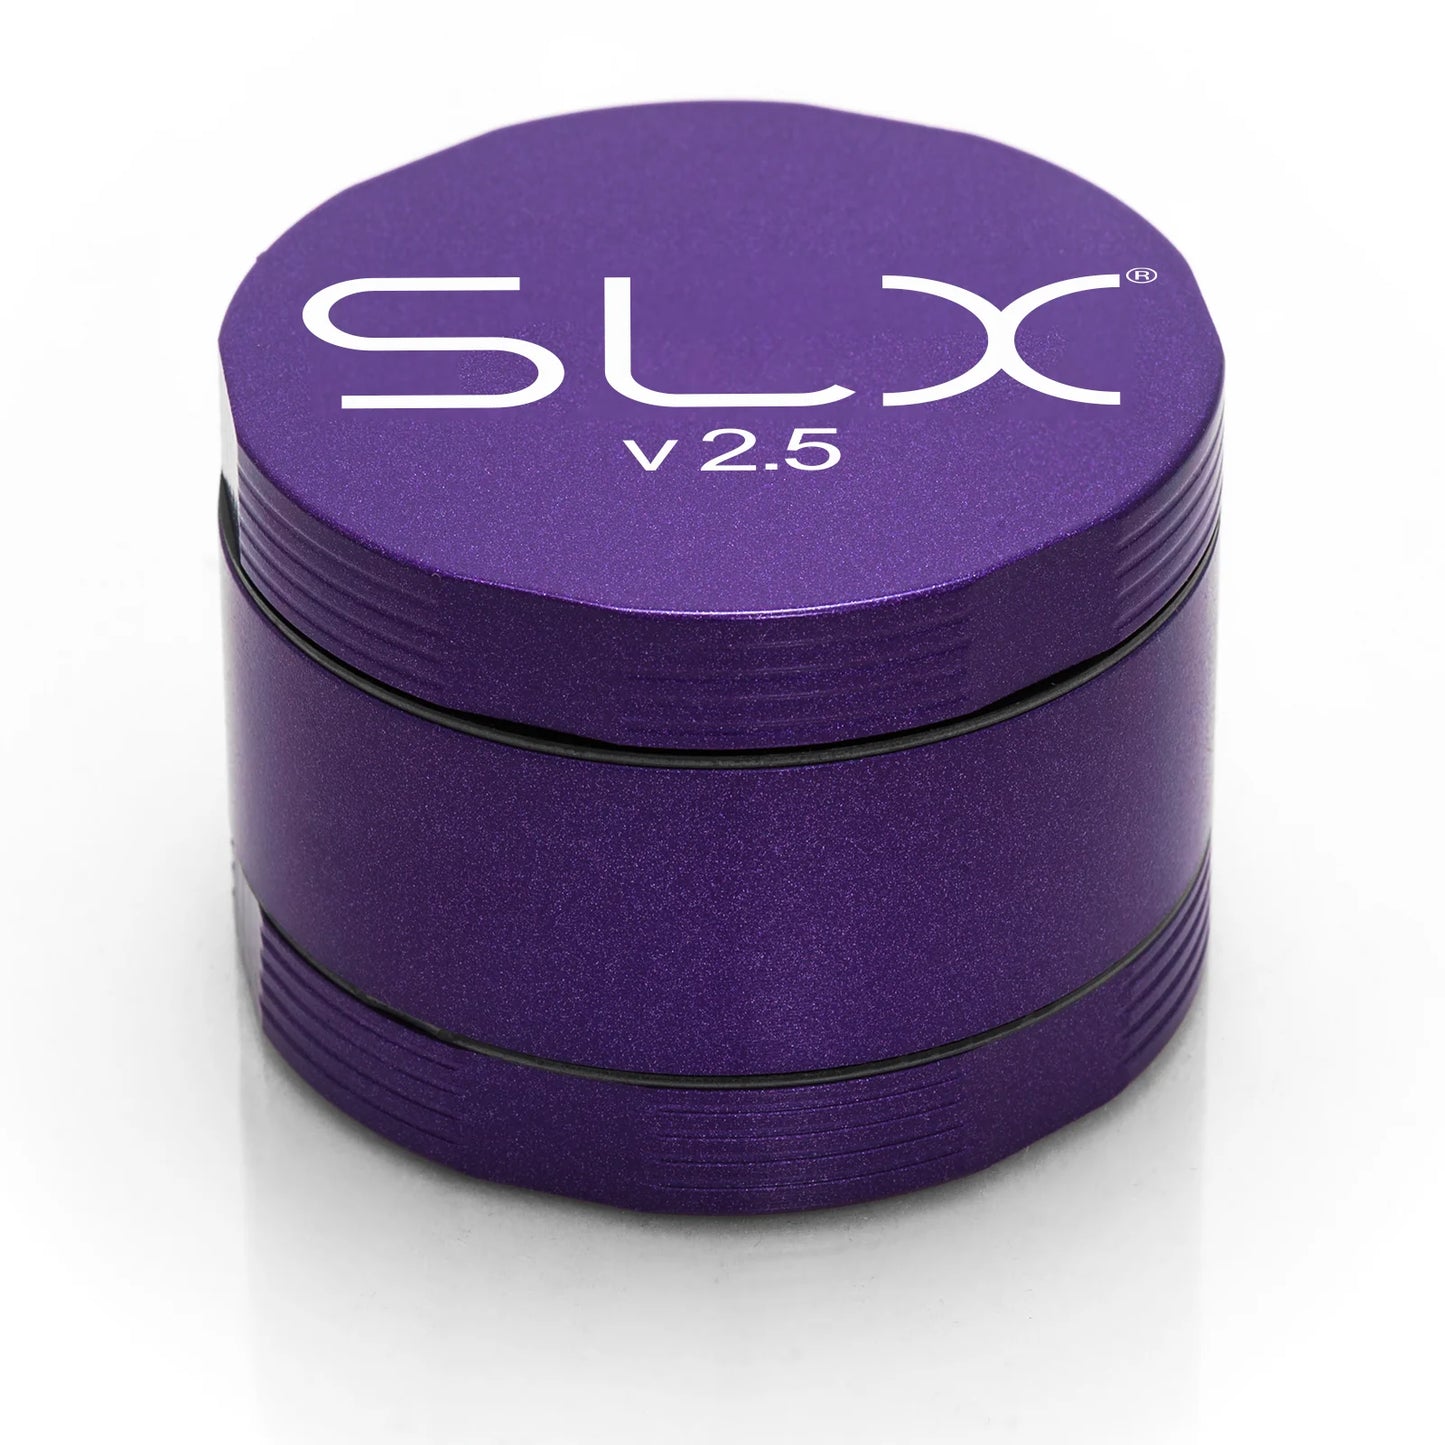 SLX v2.5 2.0" Ceramic Coat Grinder - Purple